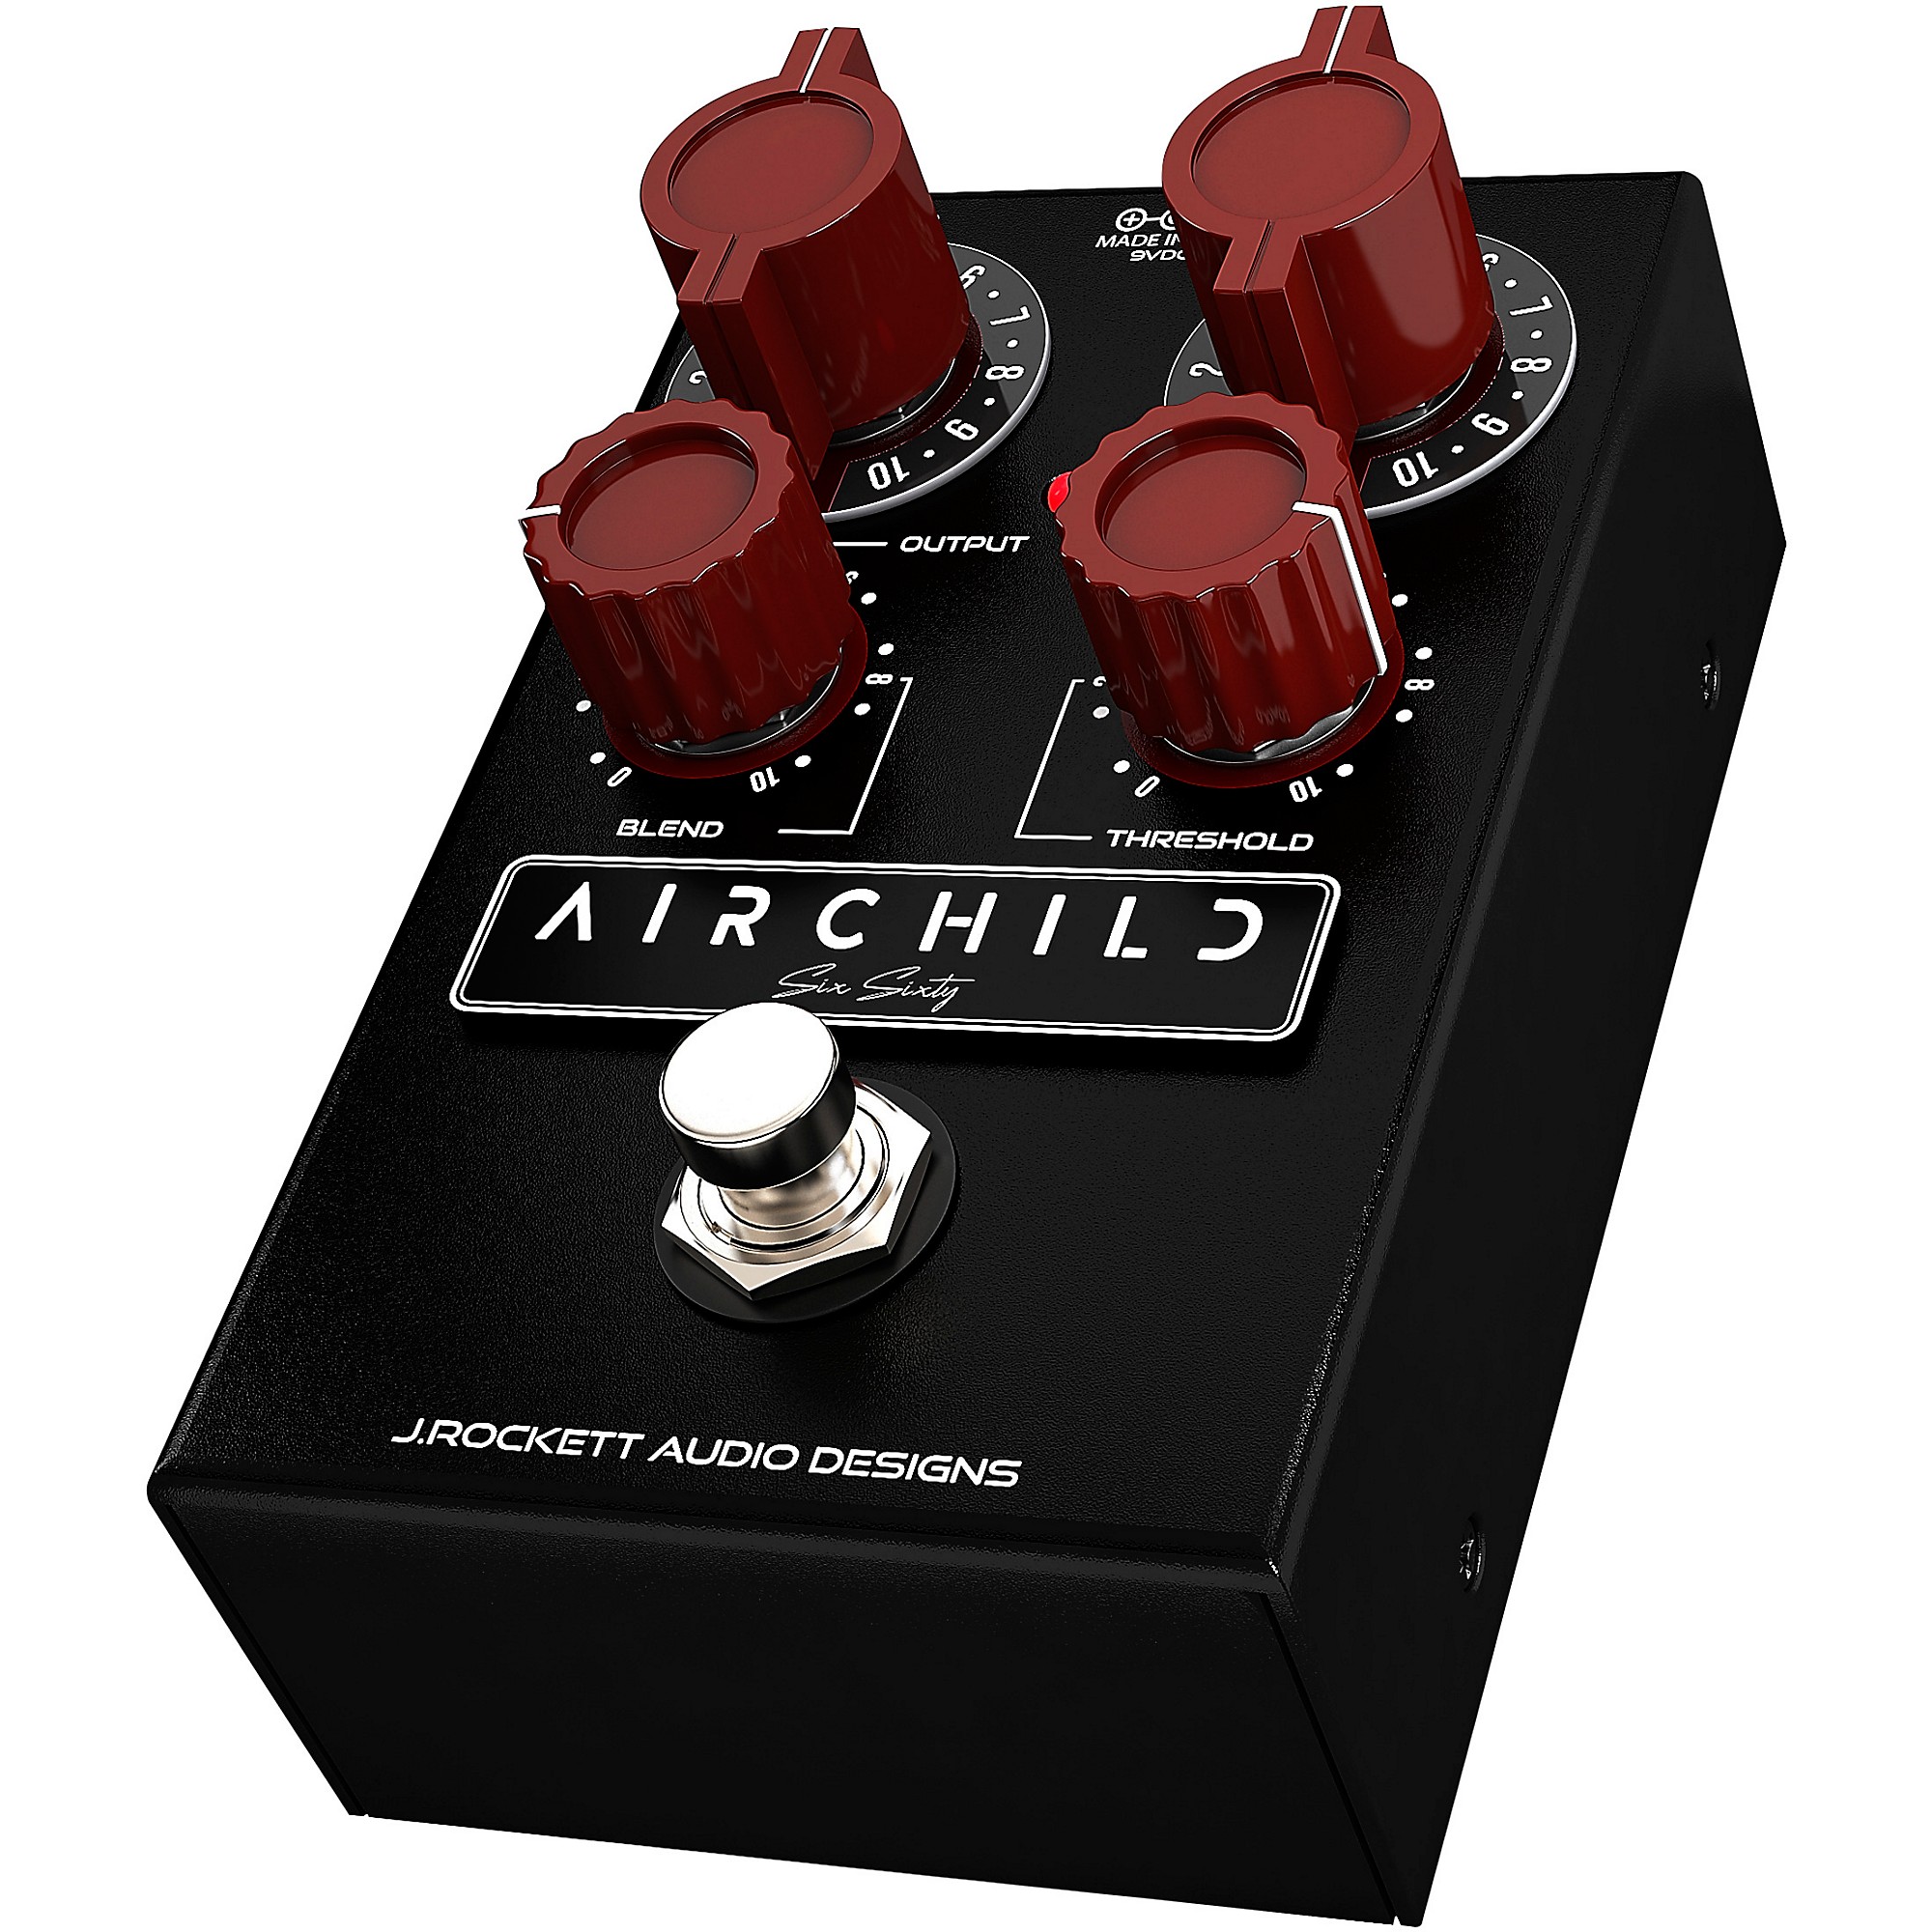 J.Rockett Audio Designs Airchild 660 Compressor Effects Pedal 